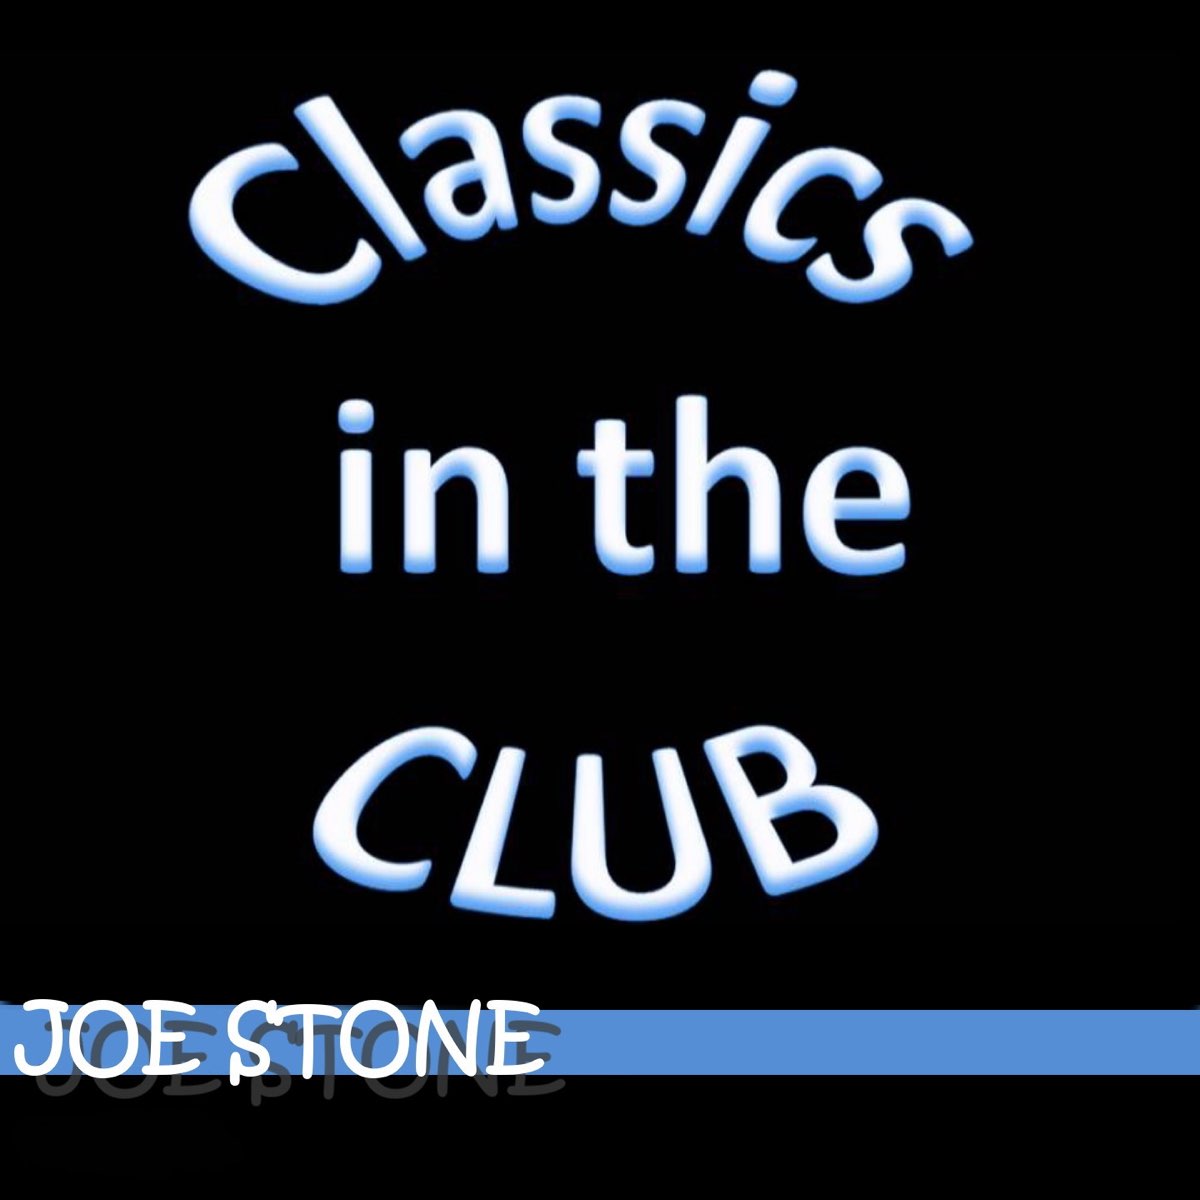 Joe stone. Joe Stone make Love.